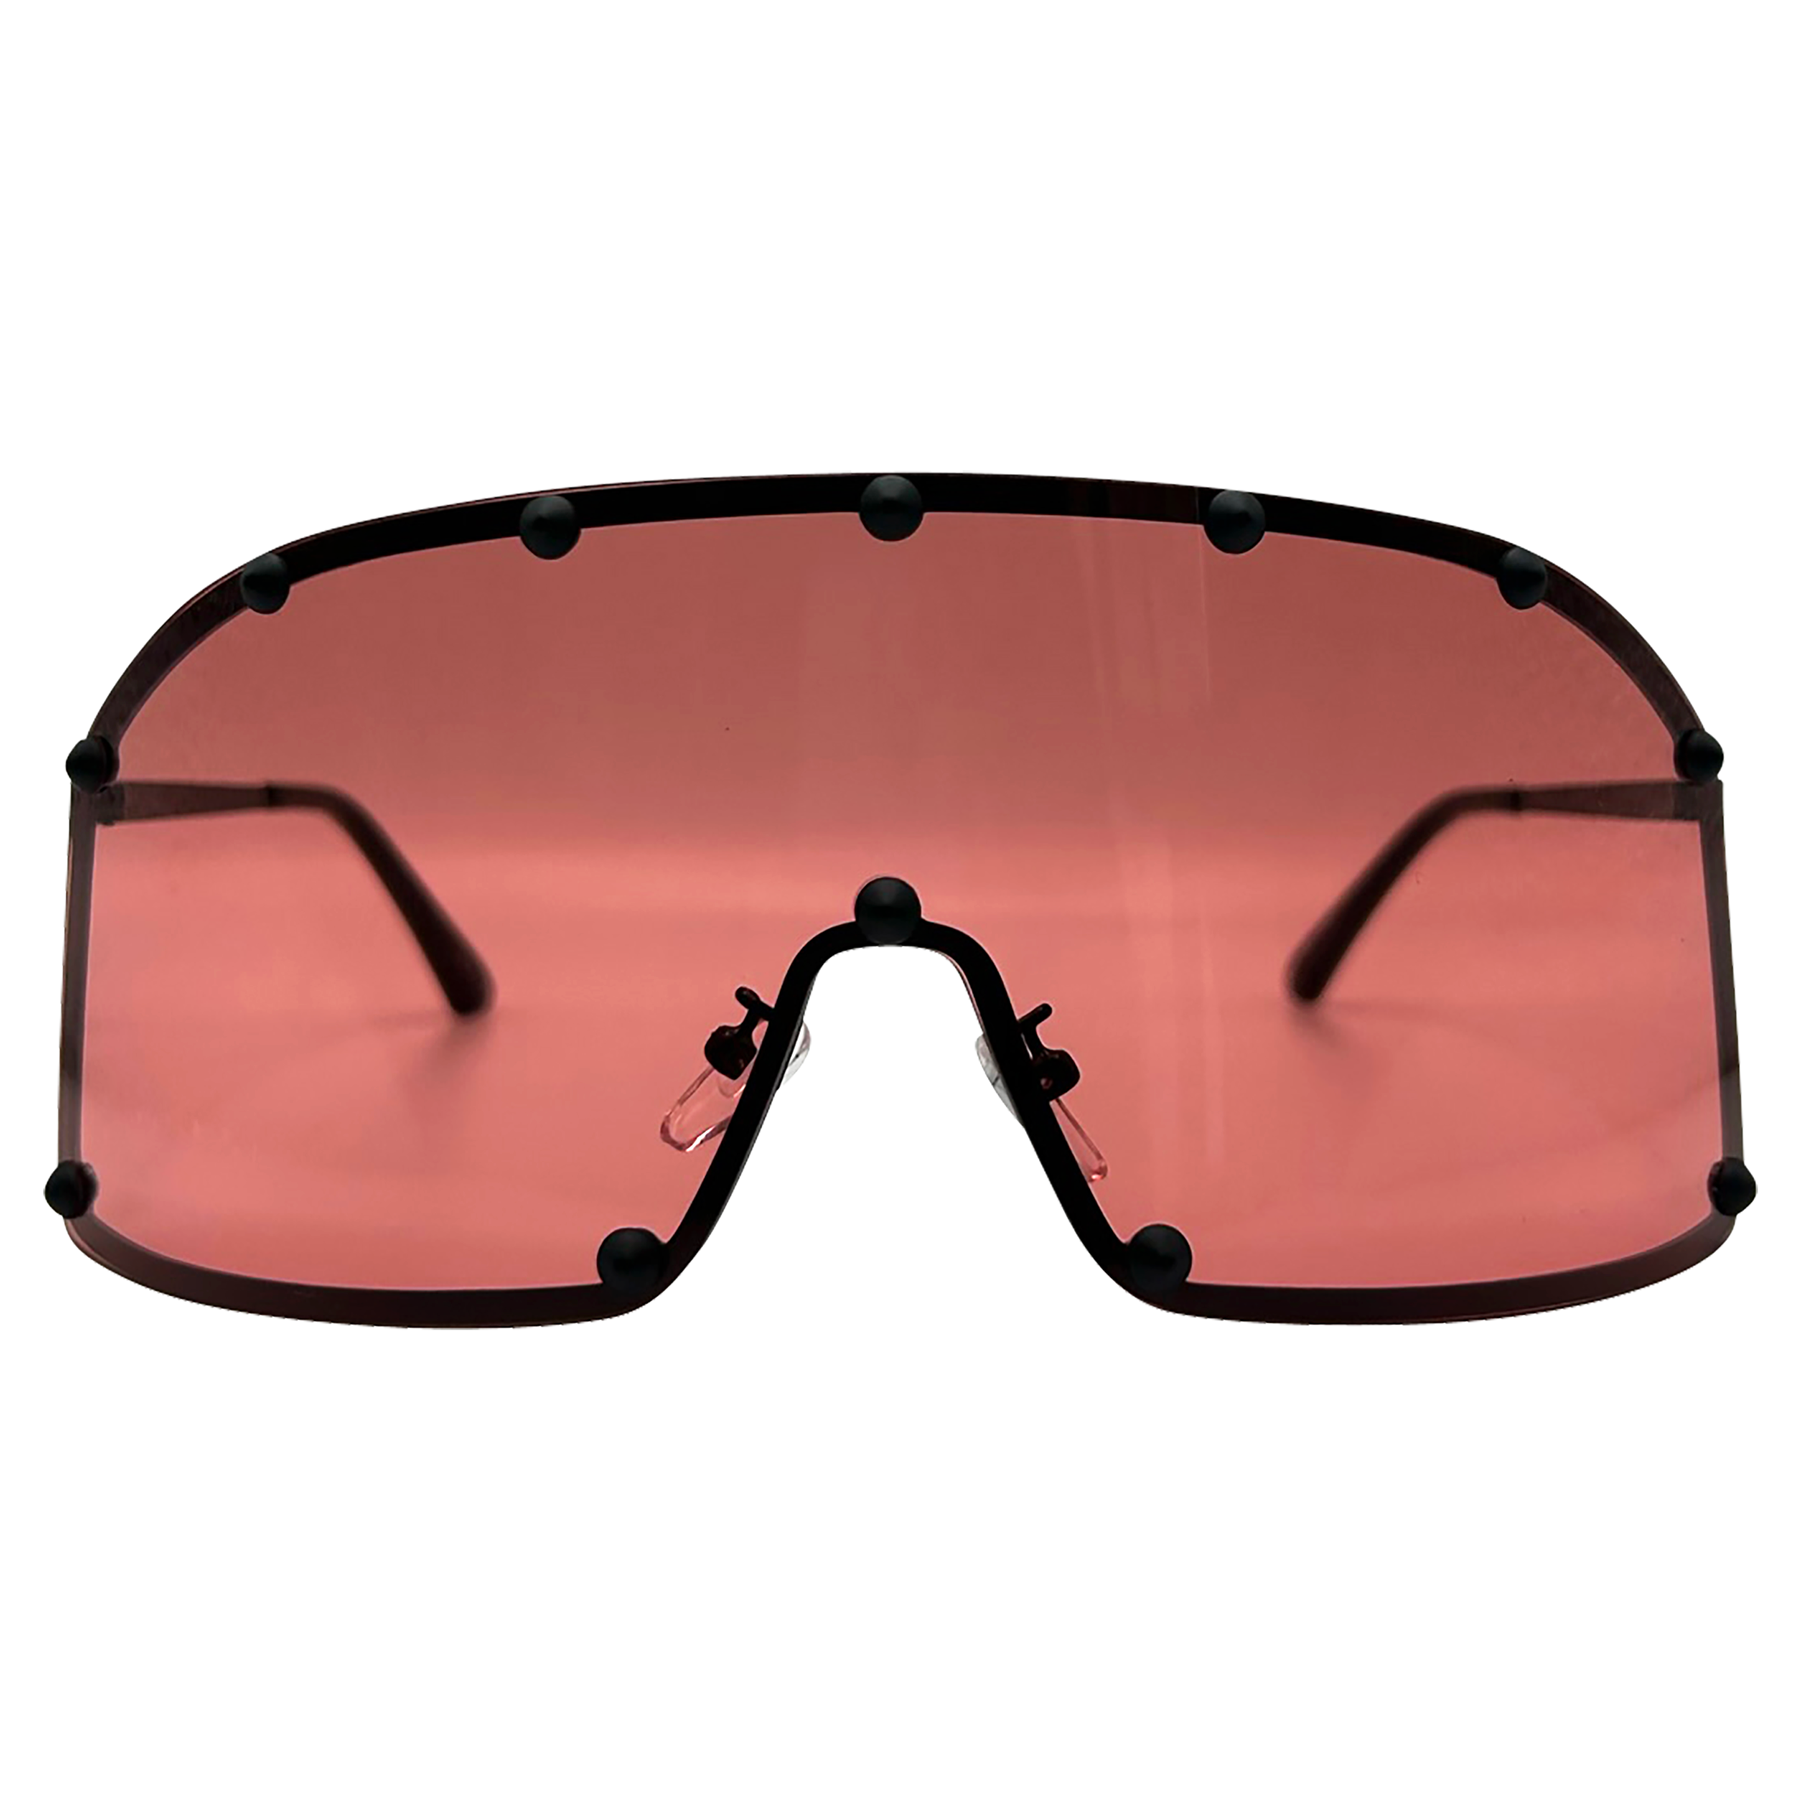 LIFEGUARD Shield Sunglasses